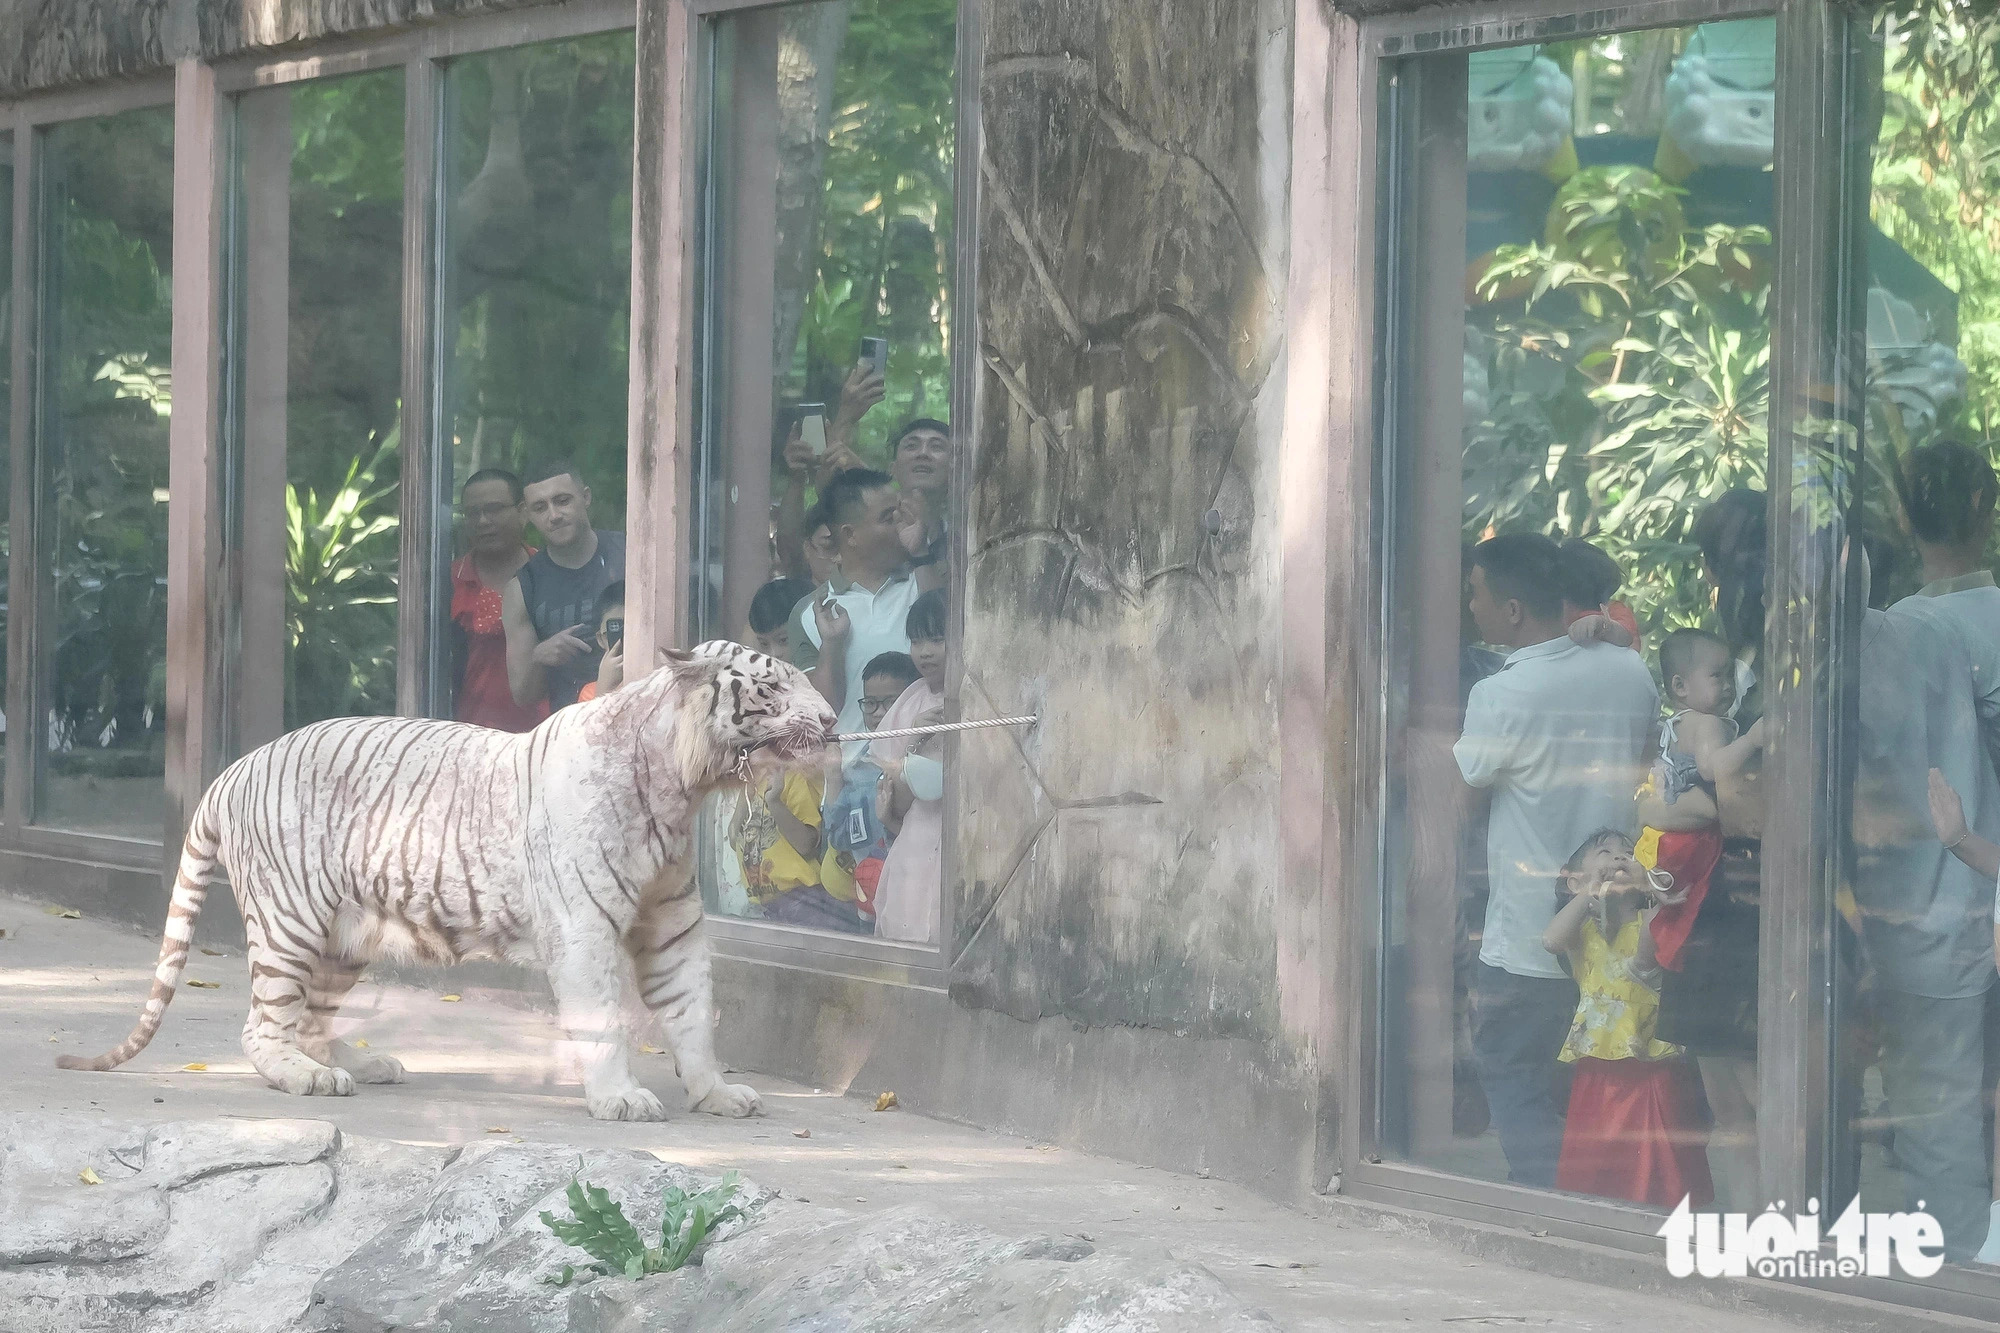 Saigon zoogoers allowed to play tug of war with tiger on Tet holiday